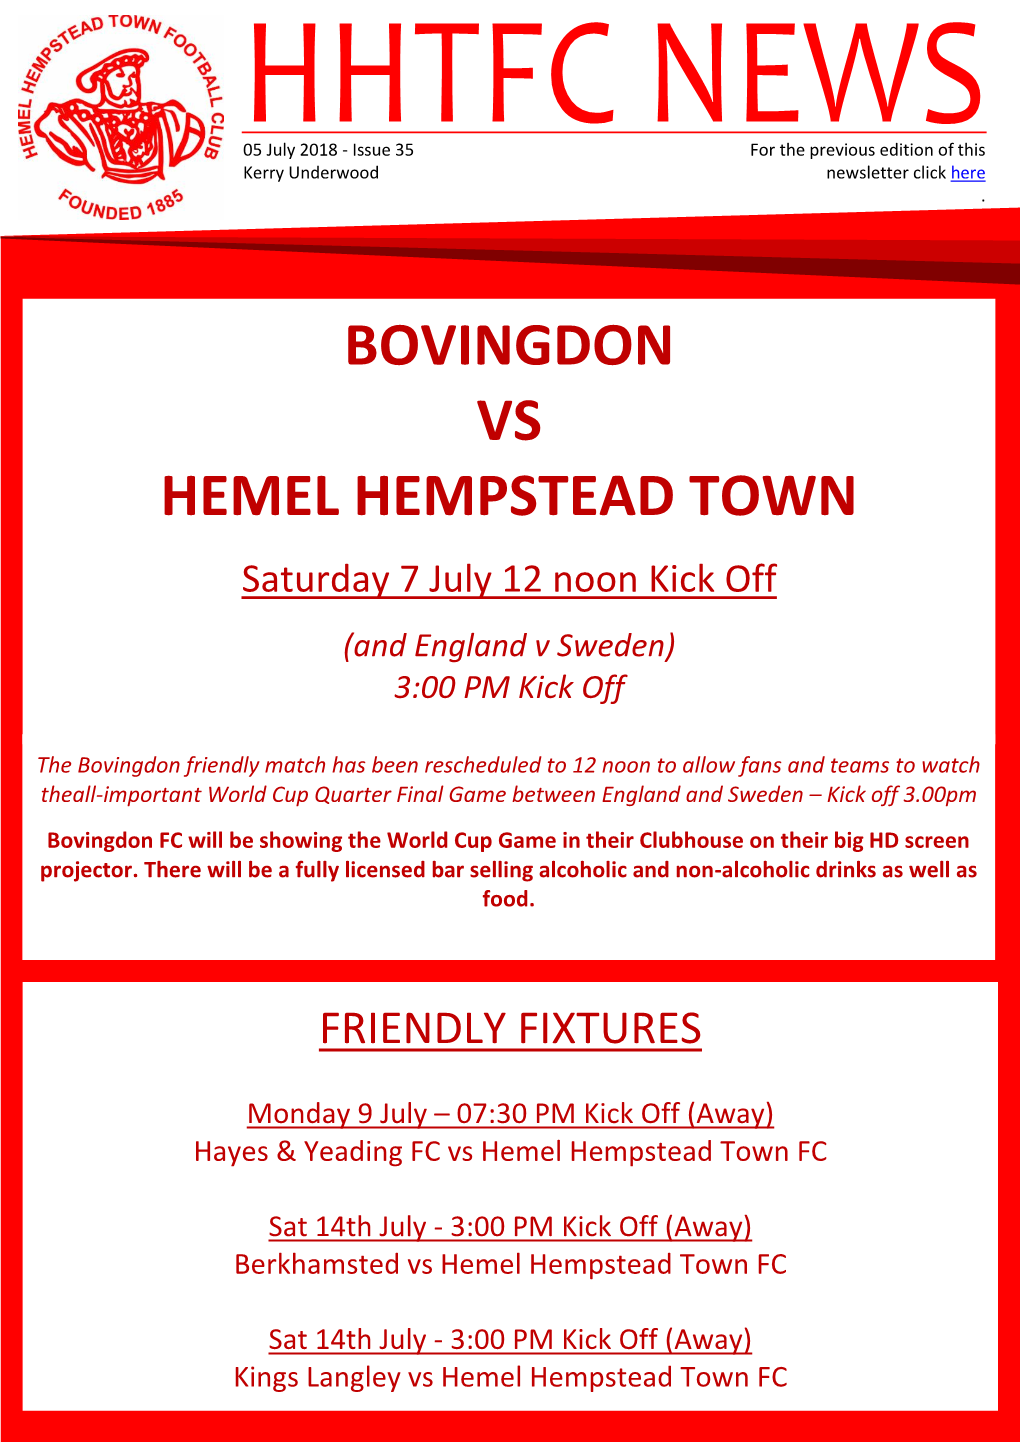 Bovingdon Vs Hemel Hempstead Town